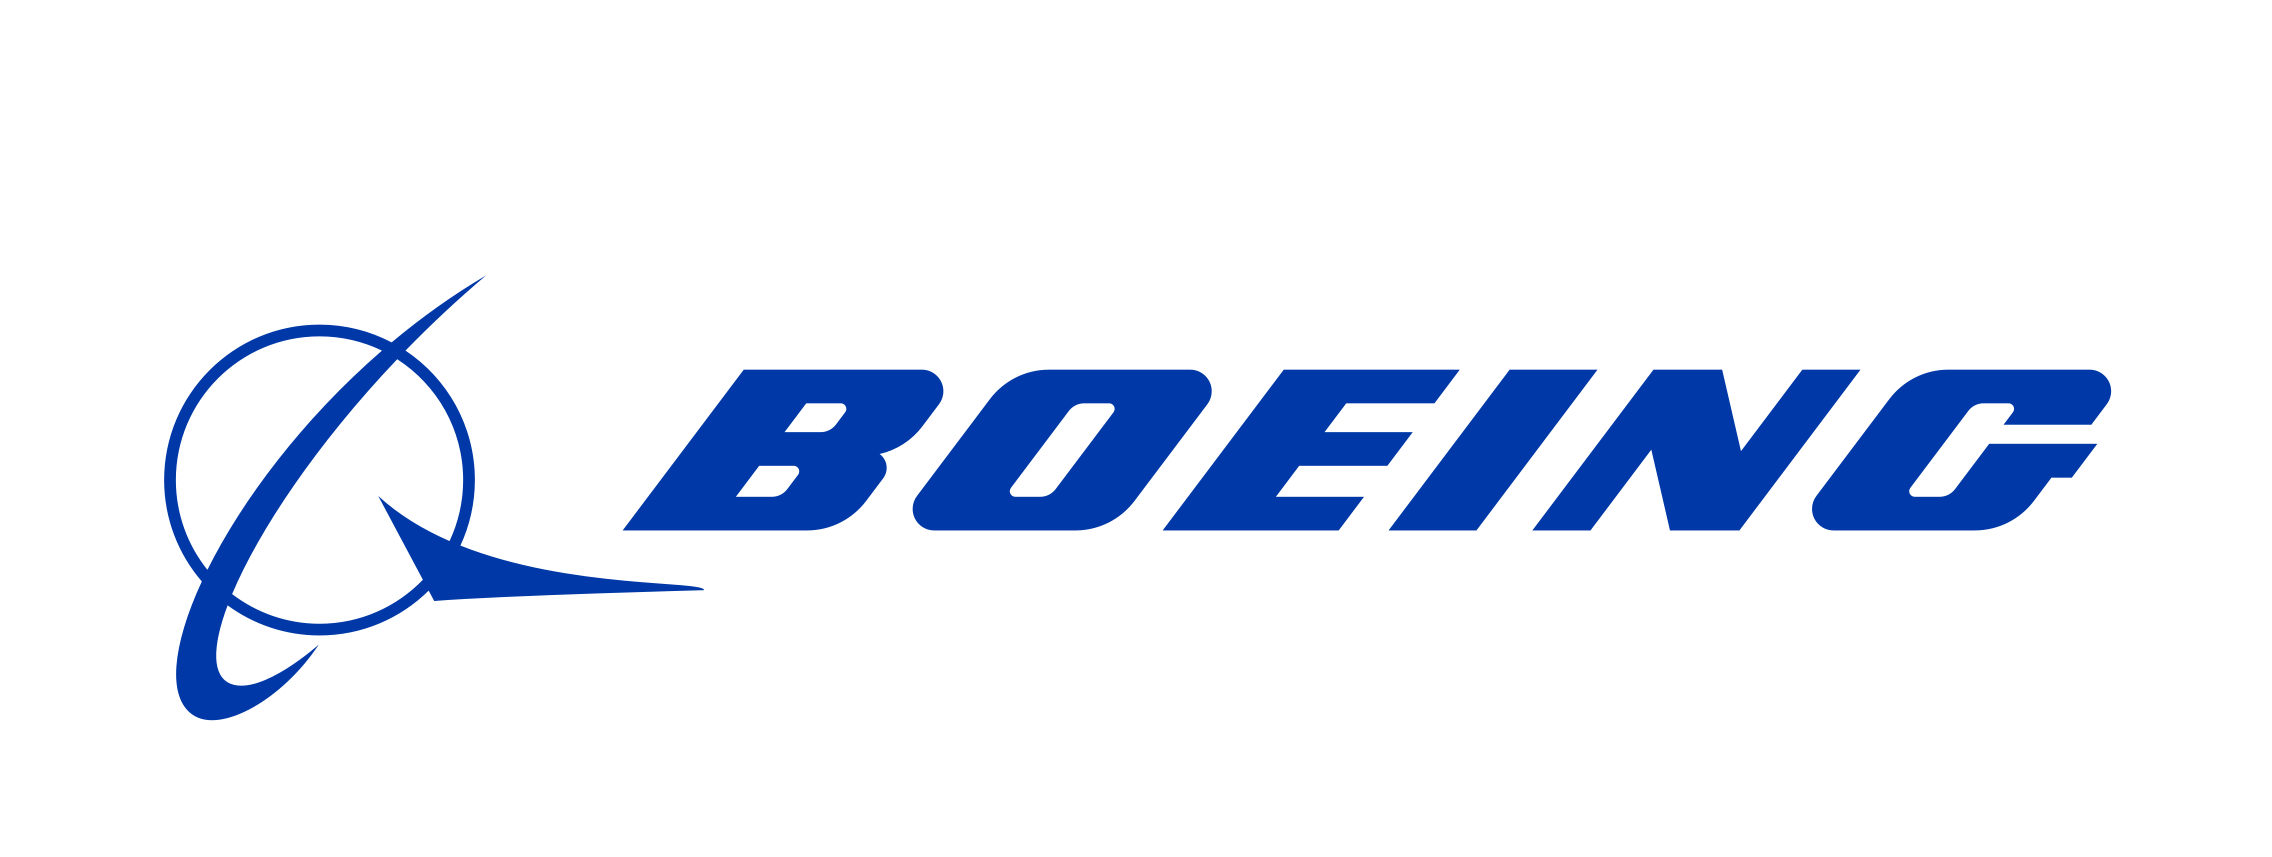 boeing_logo_2020